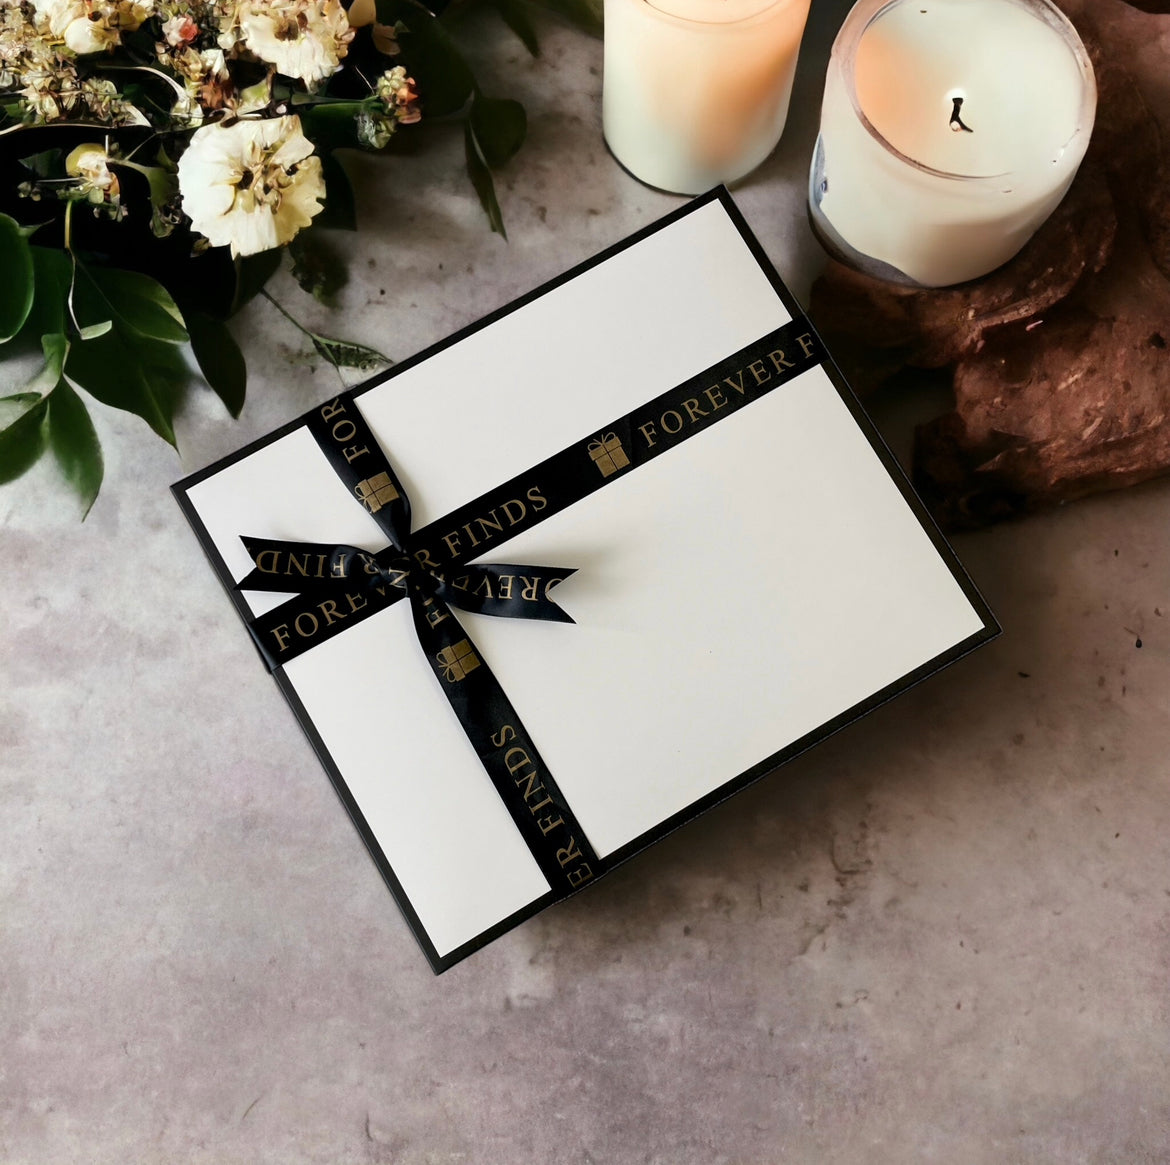 The Gratitude Gift Box